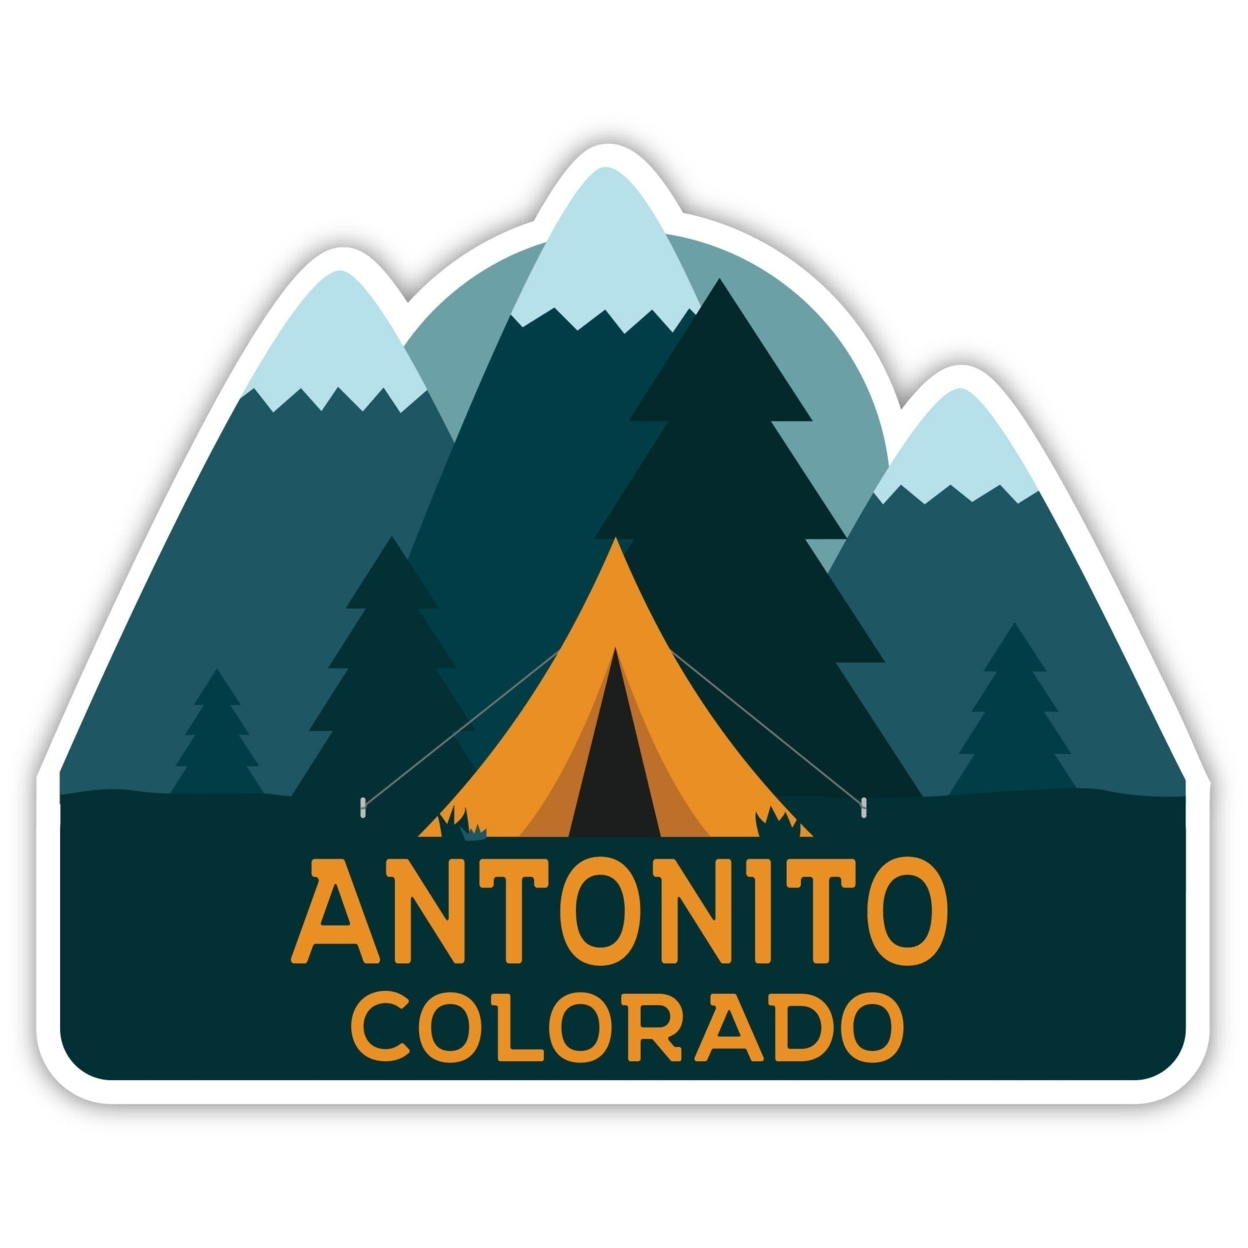 Antonito Colorado Souvenir Decorative Stickers (Choose Theme And Size) - 4-Pack, 4-Inch, Tent